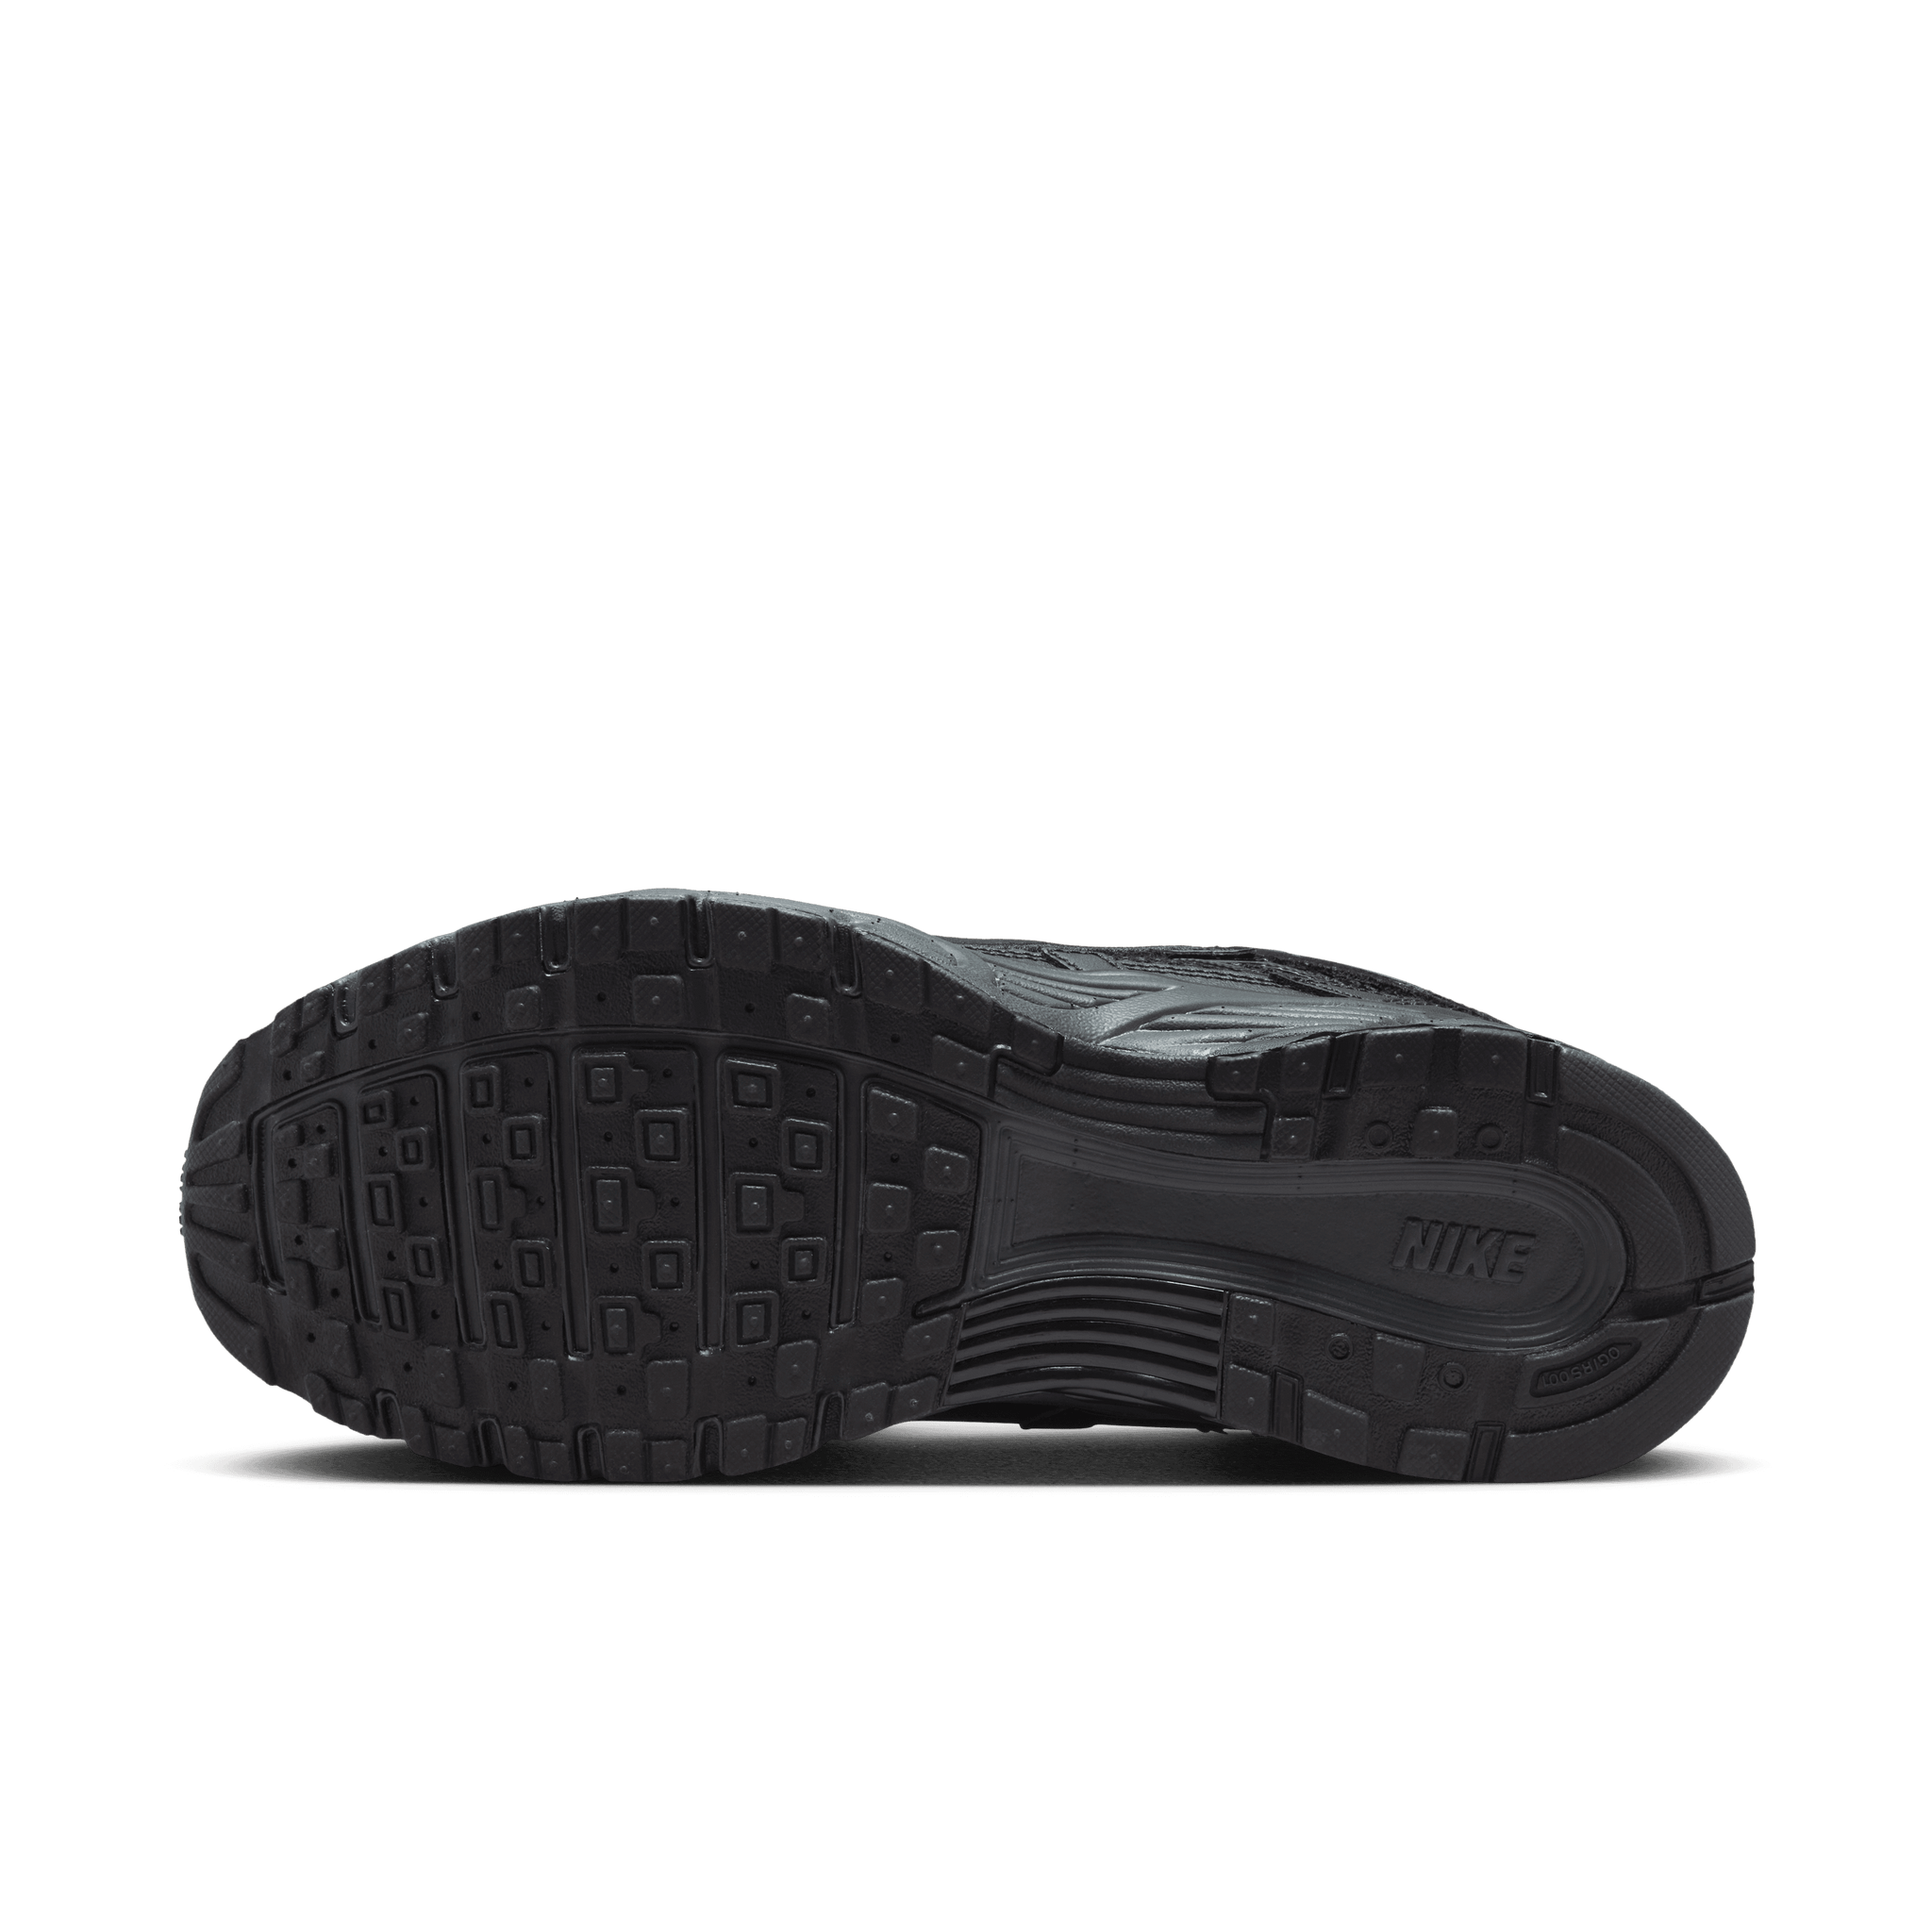 Nike - Men - P-6000 PRM - Black/Anthracite - Nohble